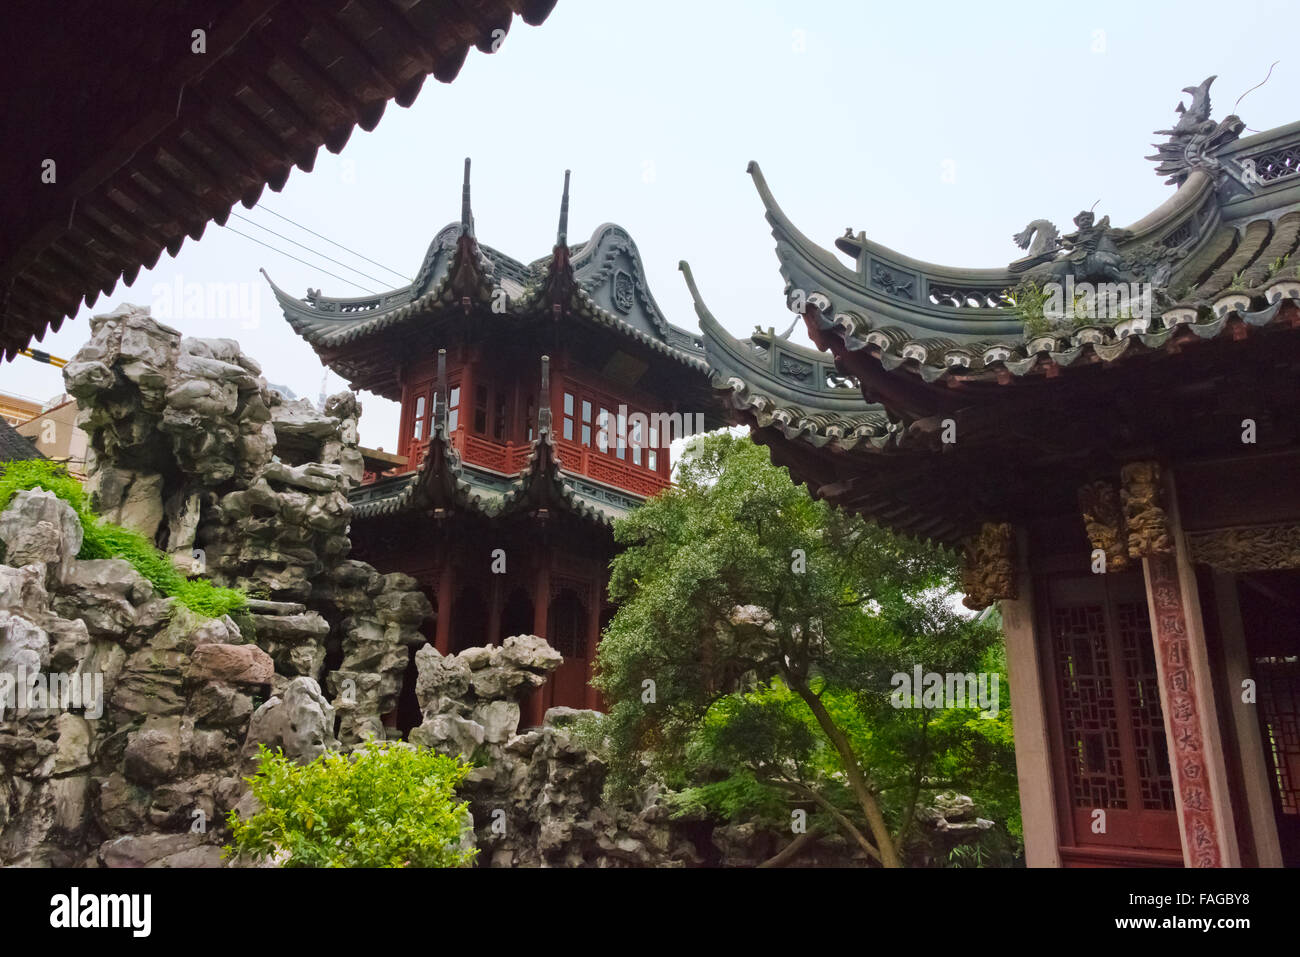 Traditional buildings in Yuyuan Garden, Shanghai, China Stock Photo